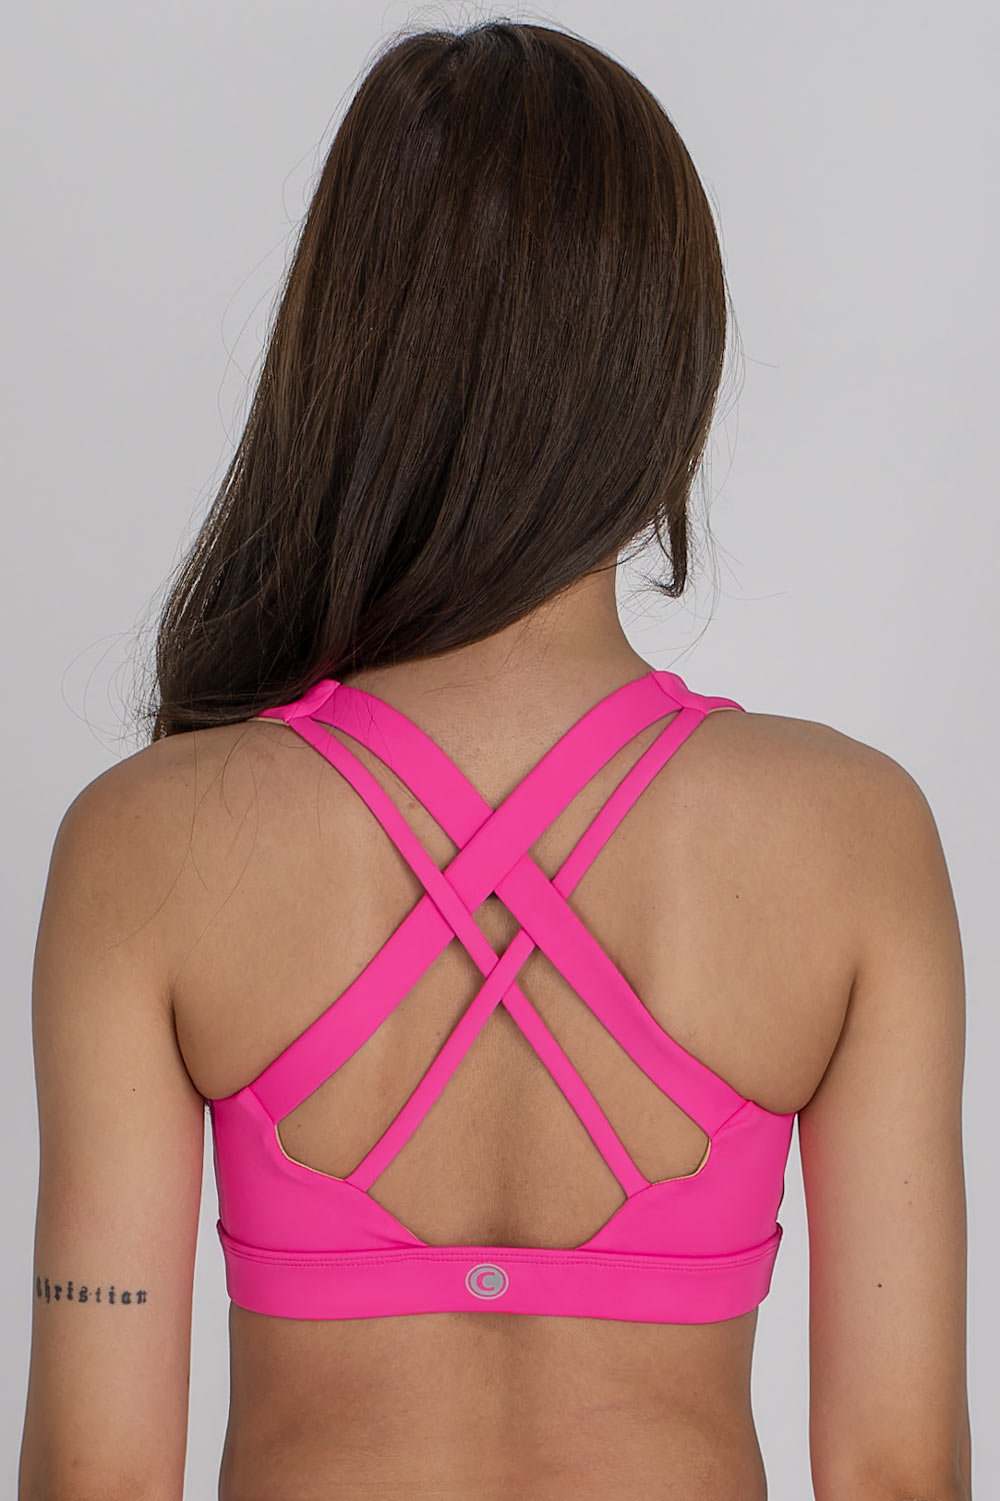 Double-Strap Sports Bra - Bubble Gum Pink - Chandra Yoga & Active Wear